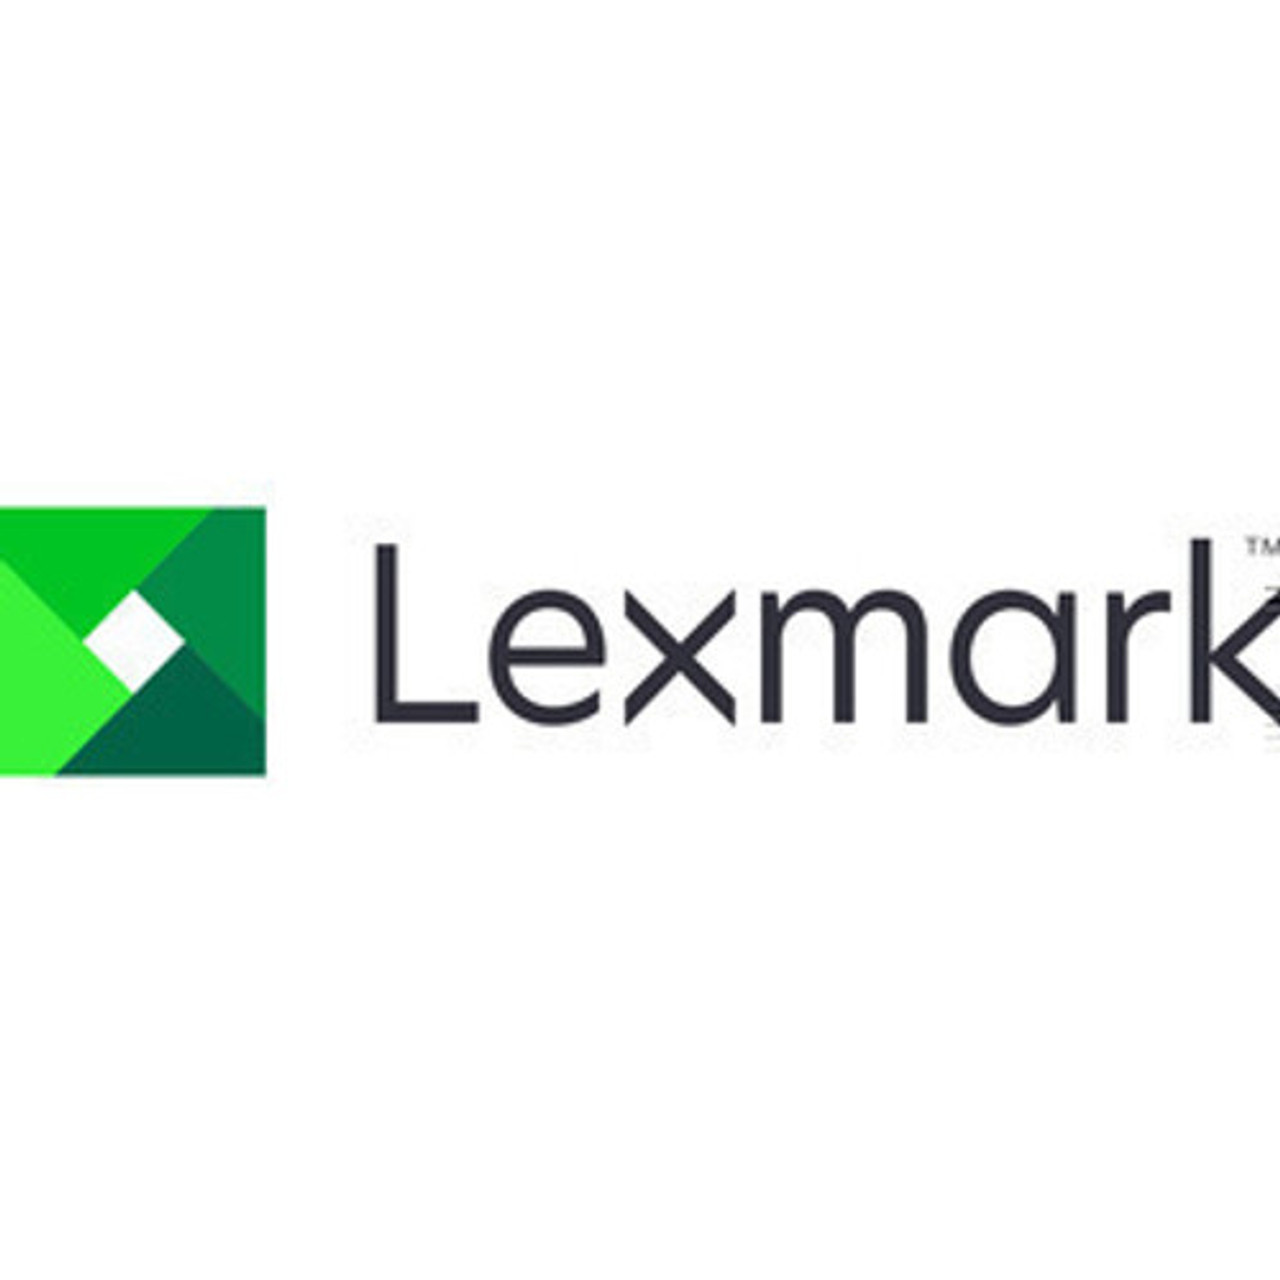 Lexmark Fuser Cover - Optra S (4059) - 99A1142